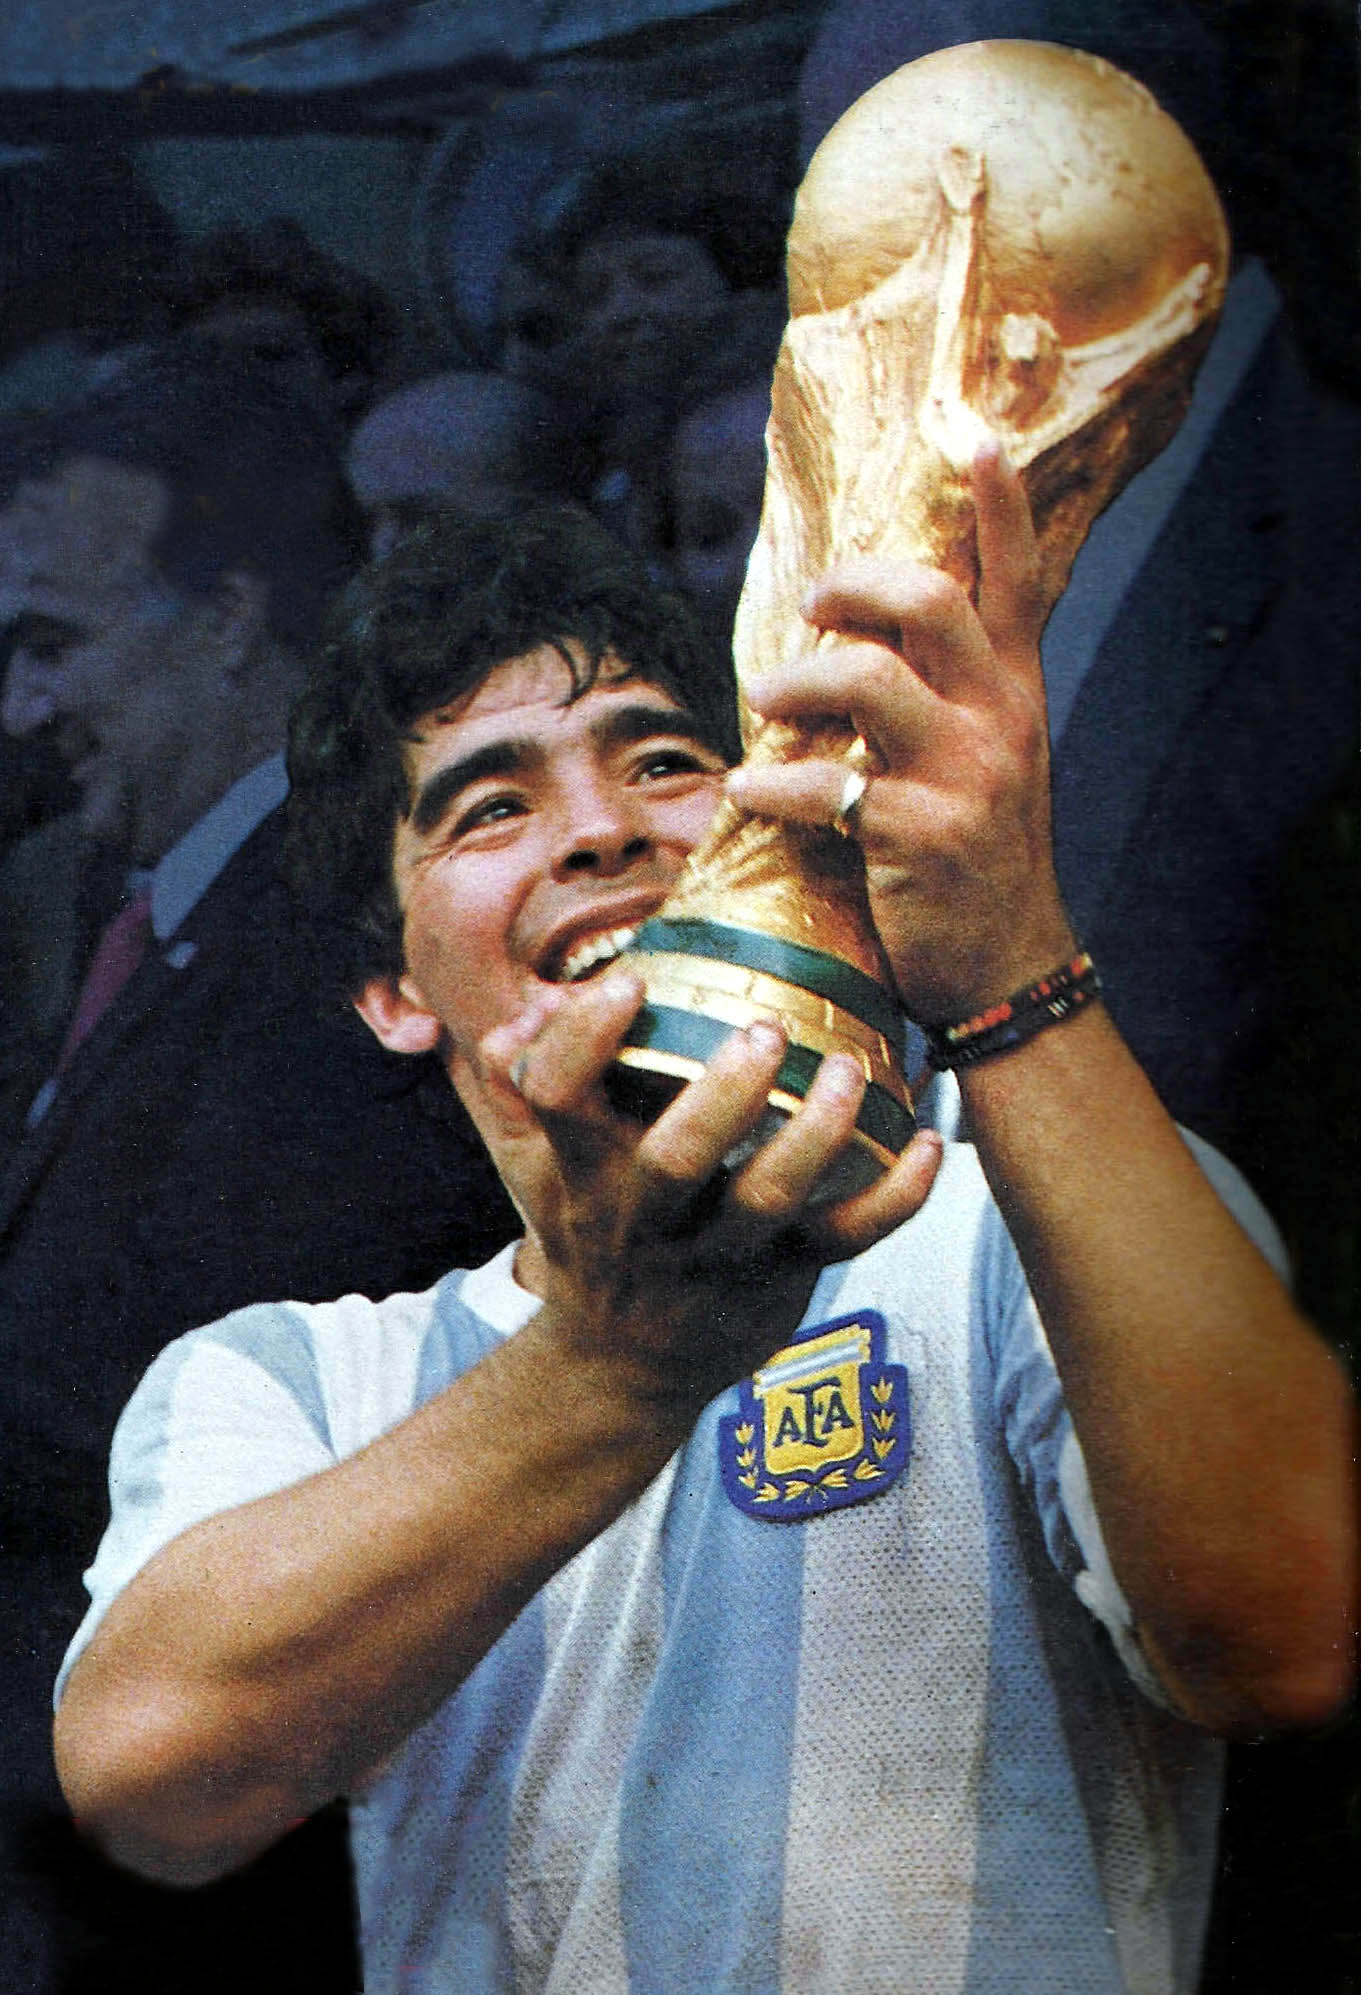 maradona-mundial-86-con-la-copa.jpeg